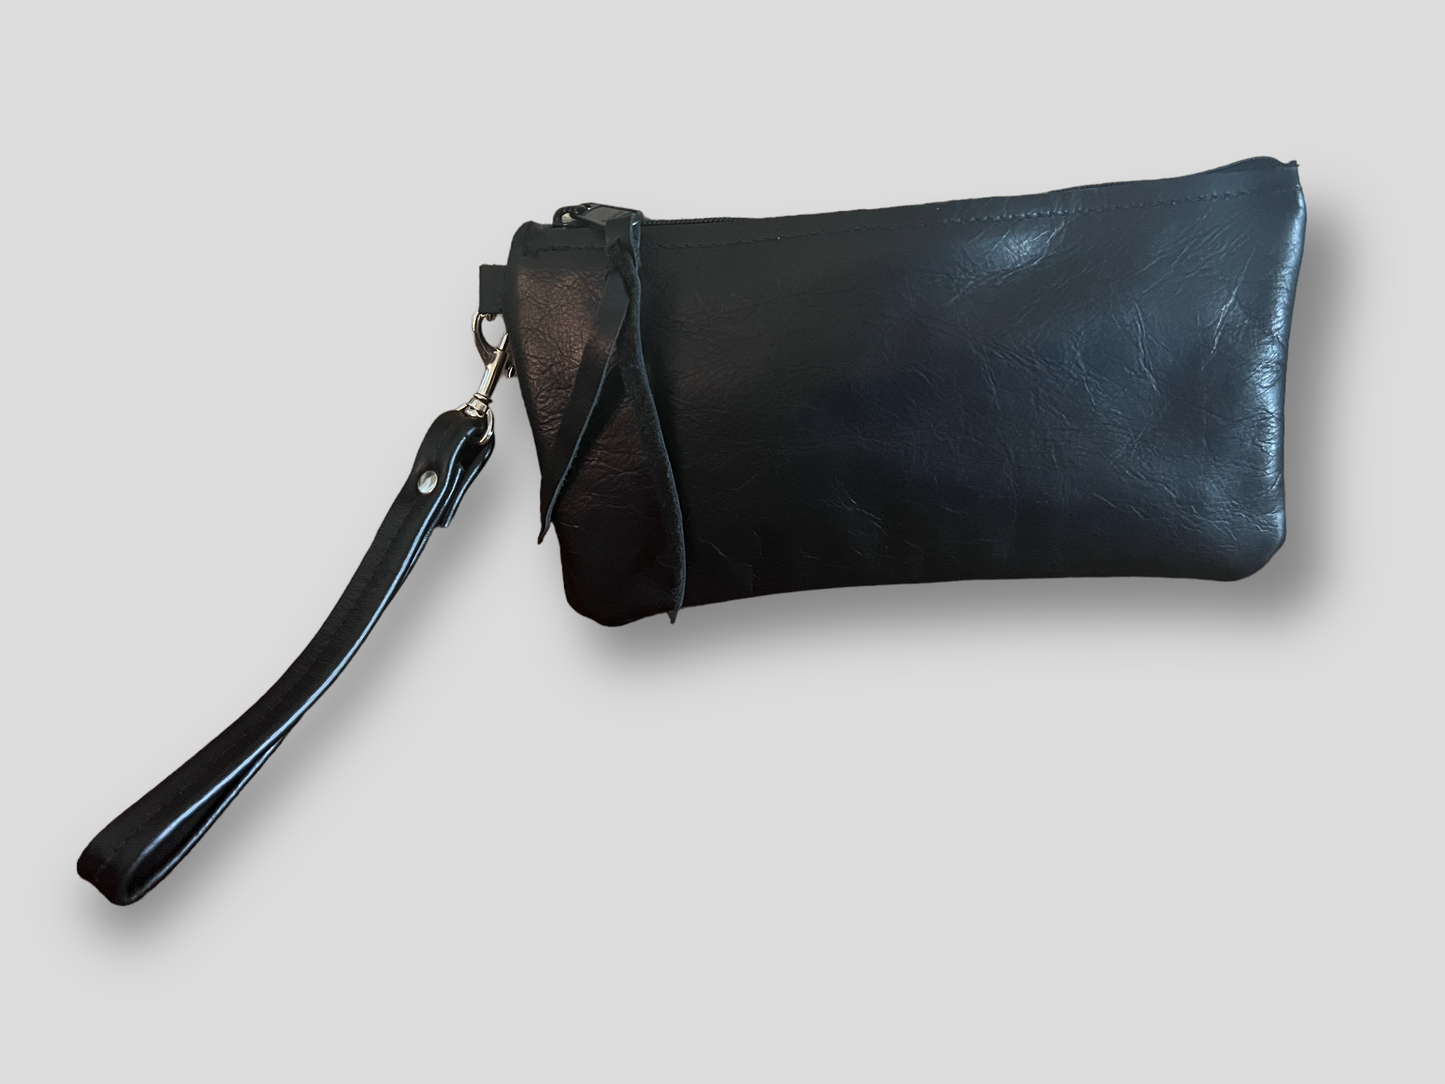 Black soft leather clutch